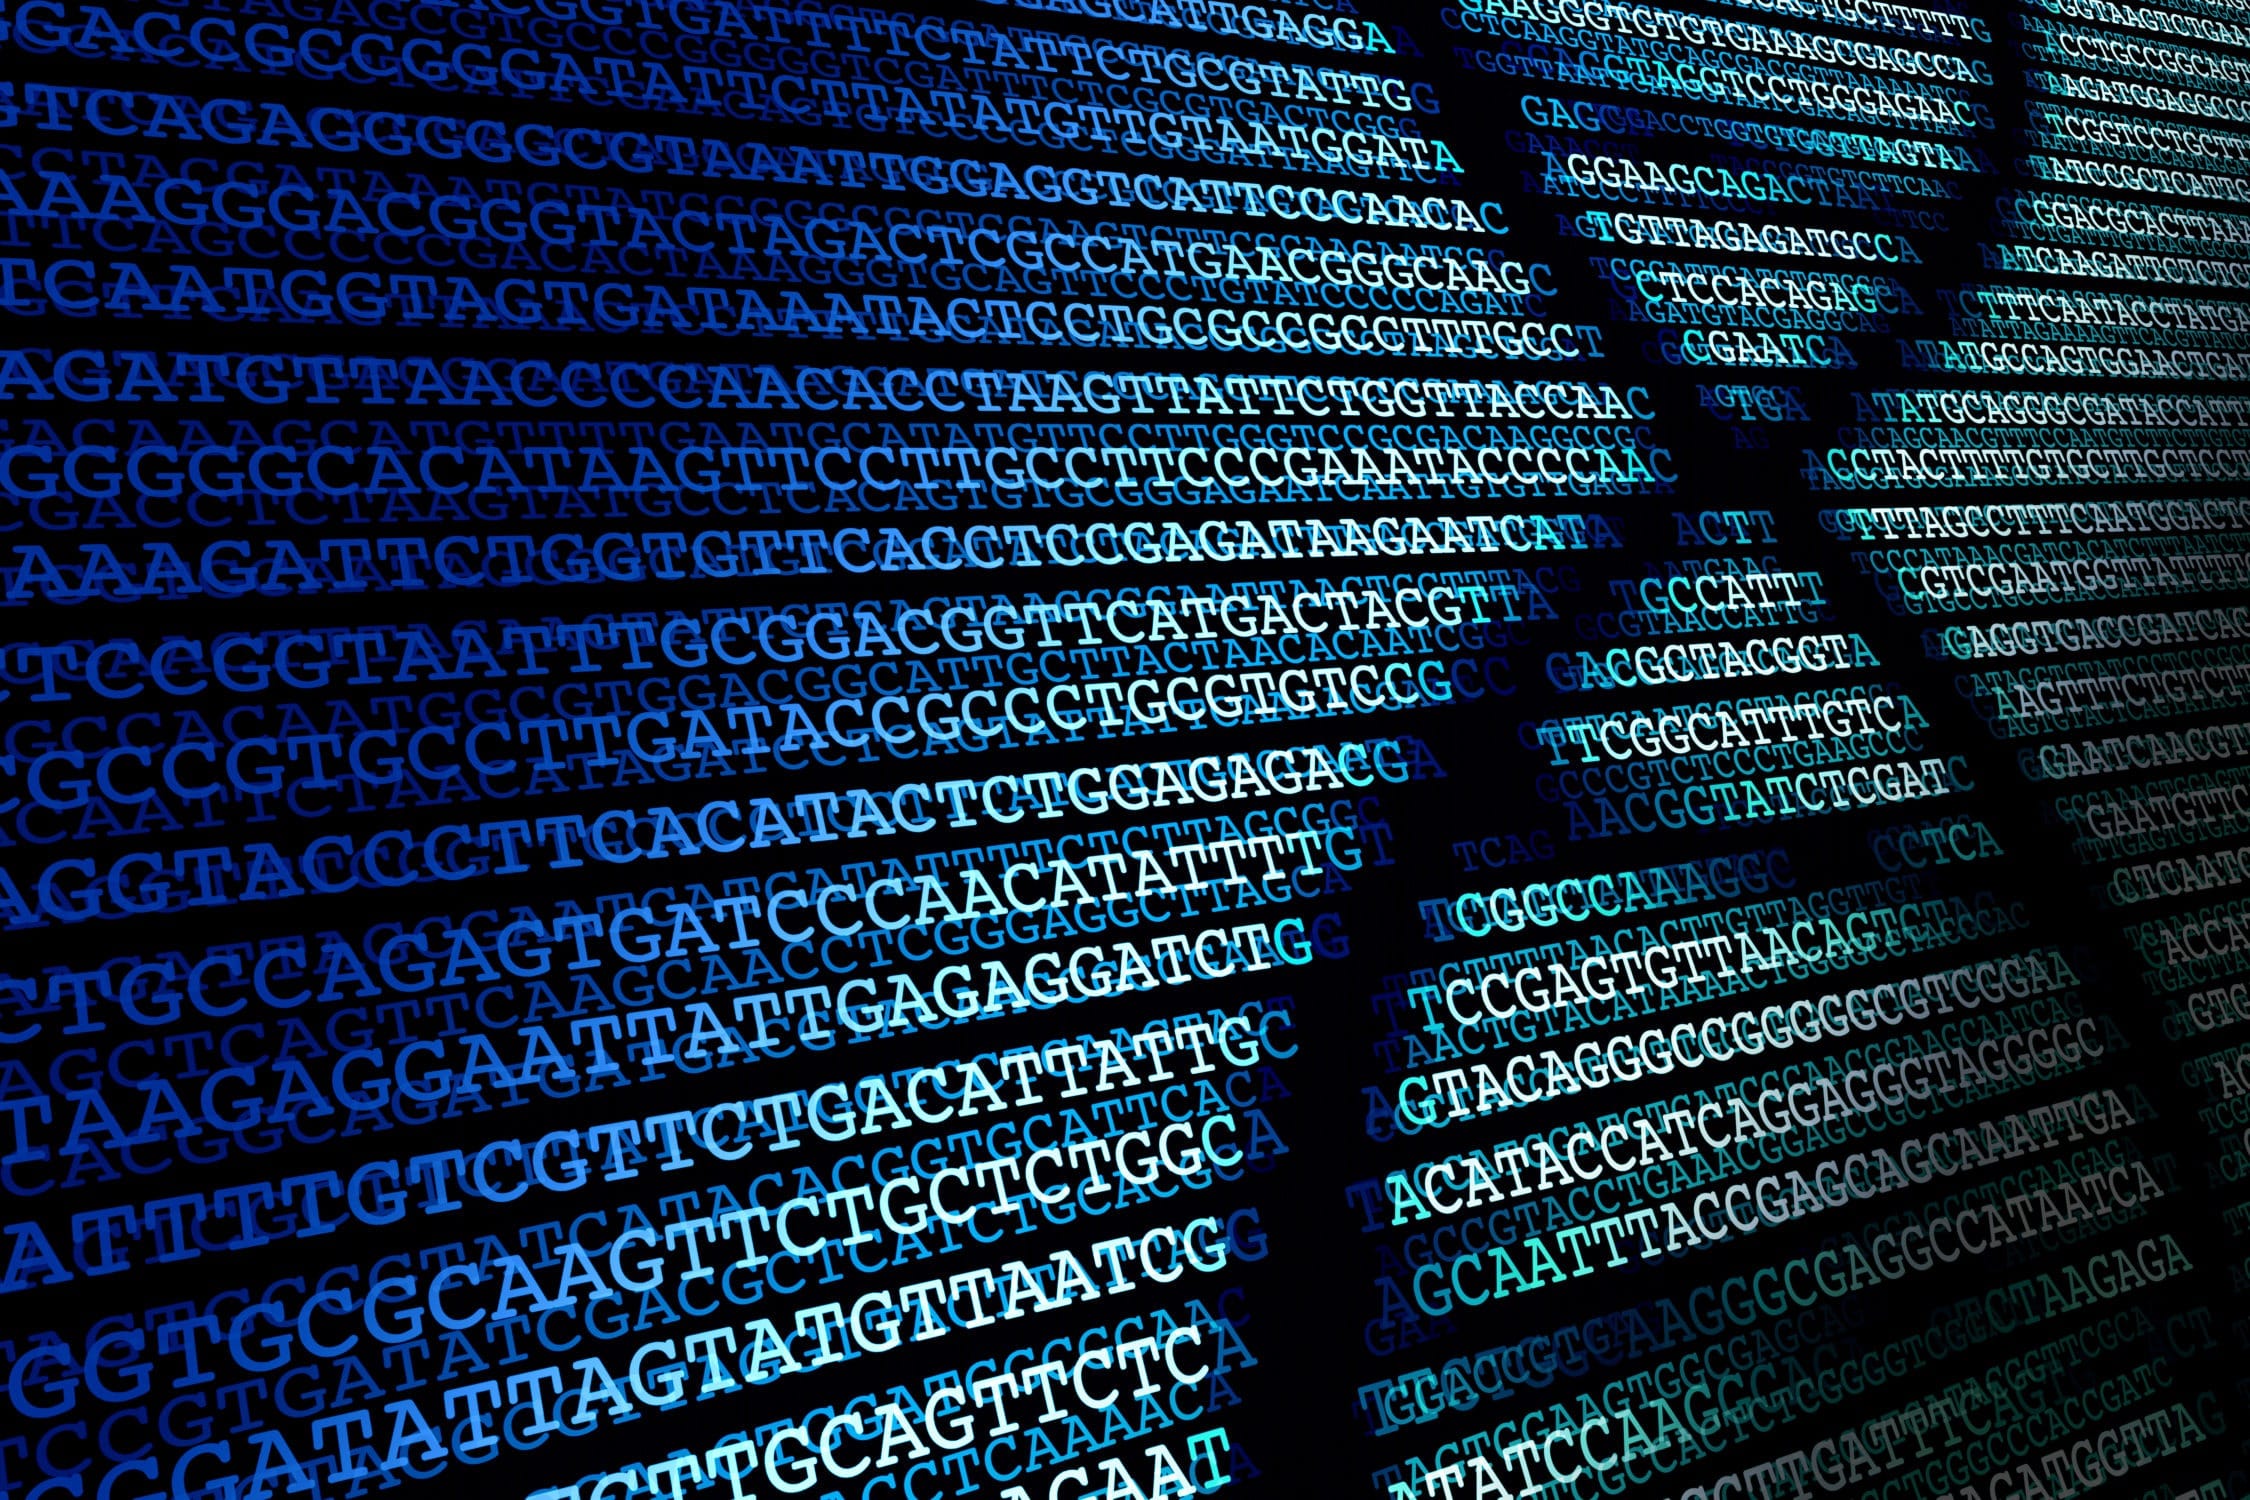 genodive for genomic data windows